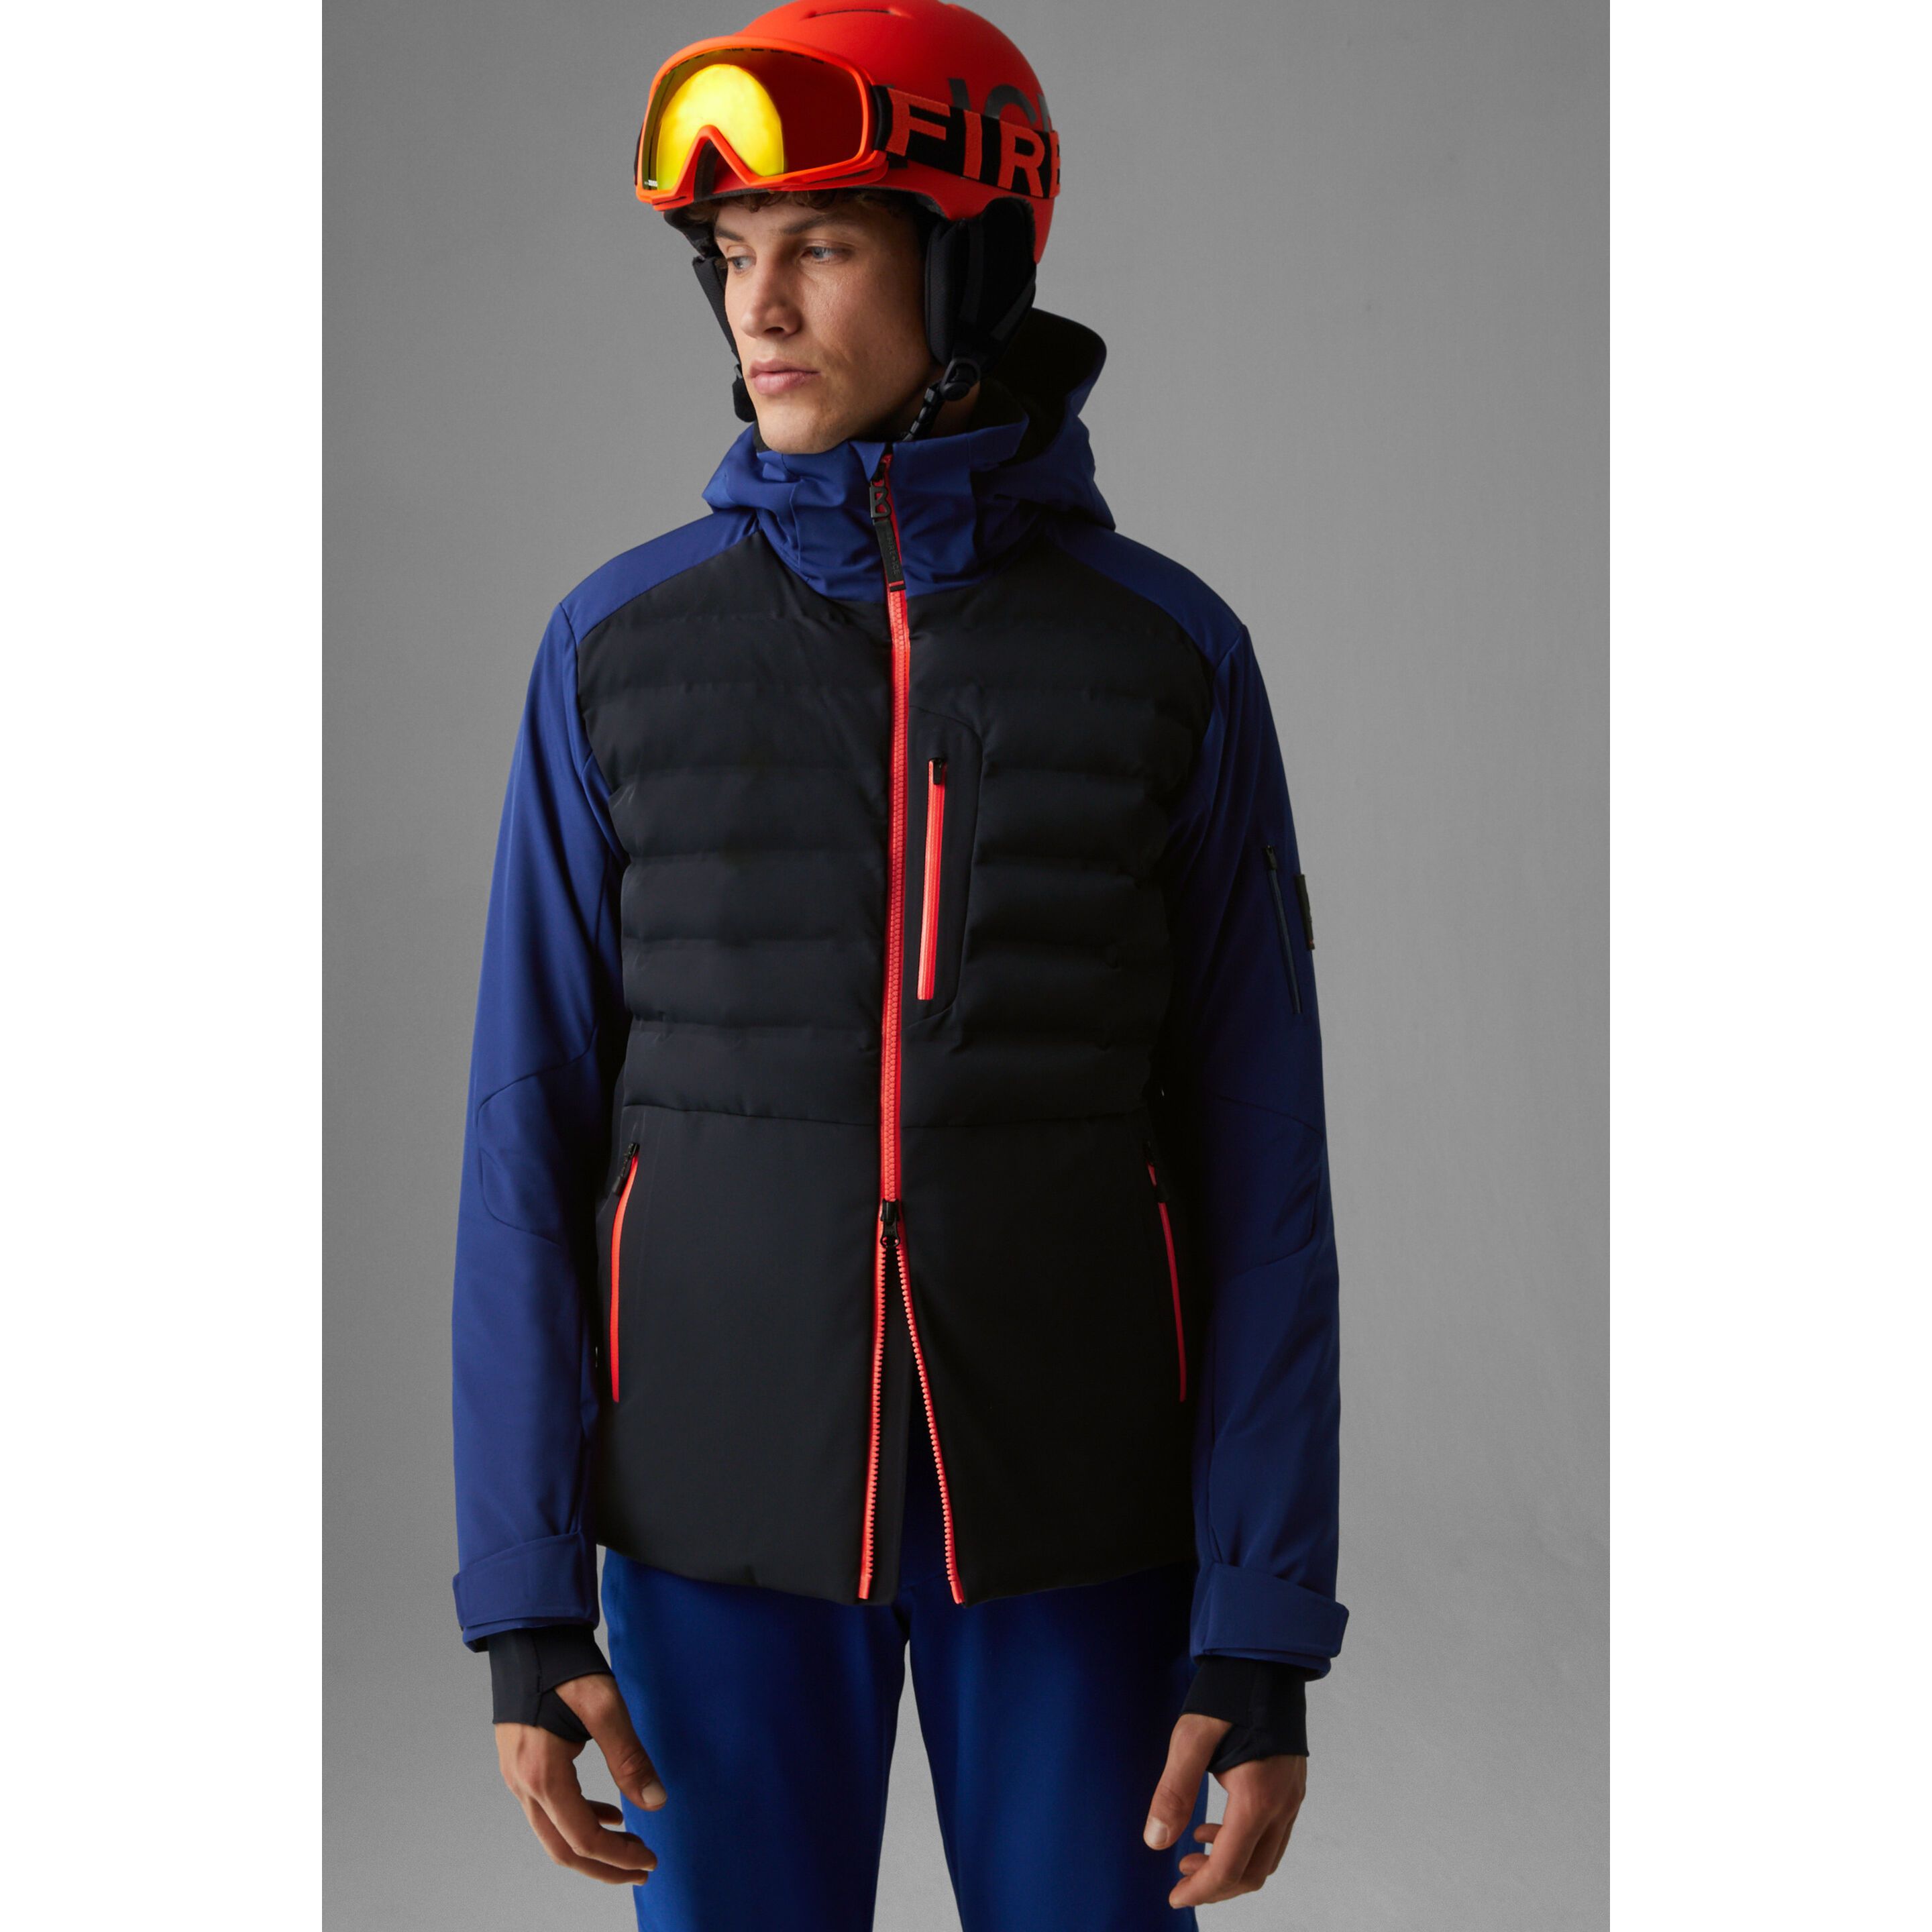 Geci Ski & Snow -  bogner fire and ice IVO Ski Jacket